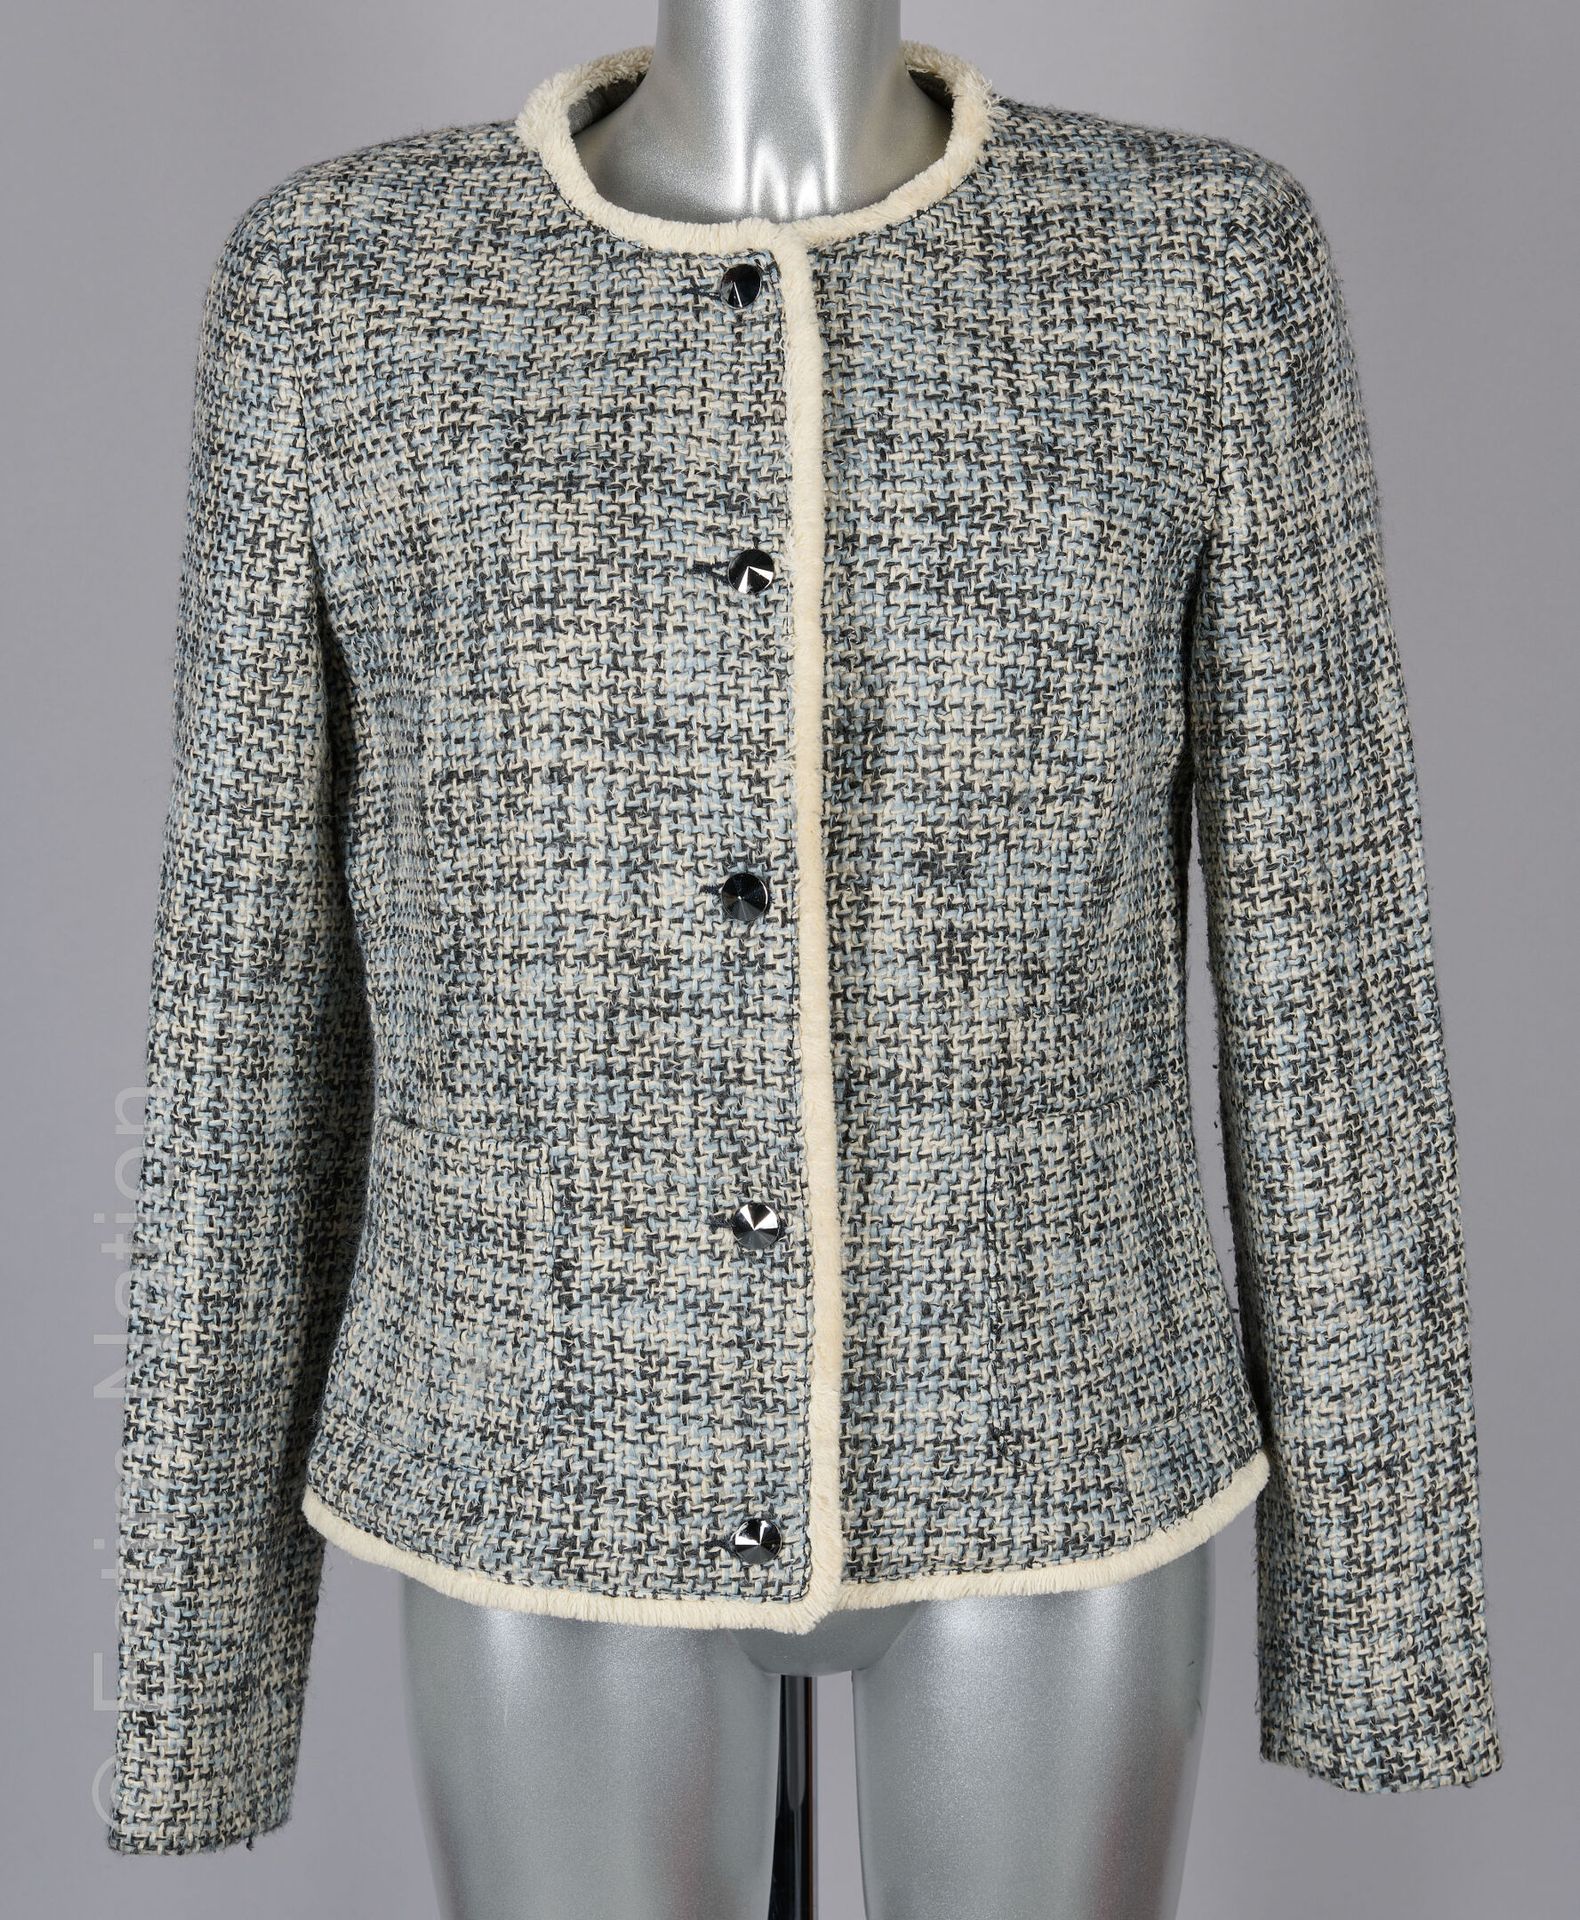 Fancy tweed jacket in blue and beige tones, frayed edges…